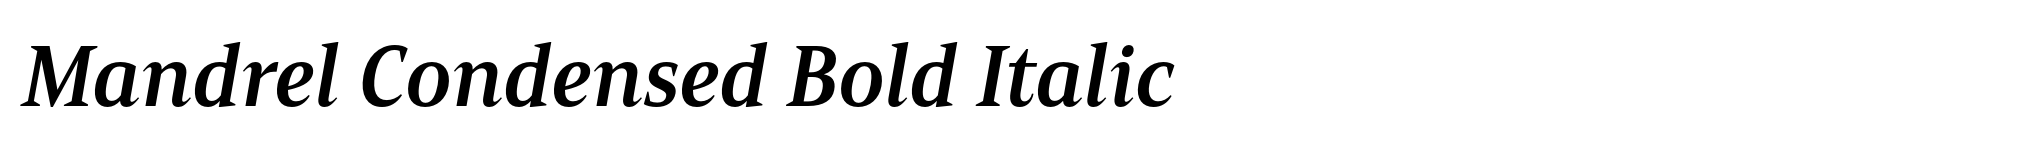 Mandrel Condensed Bold Italic image